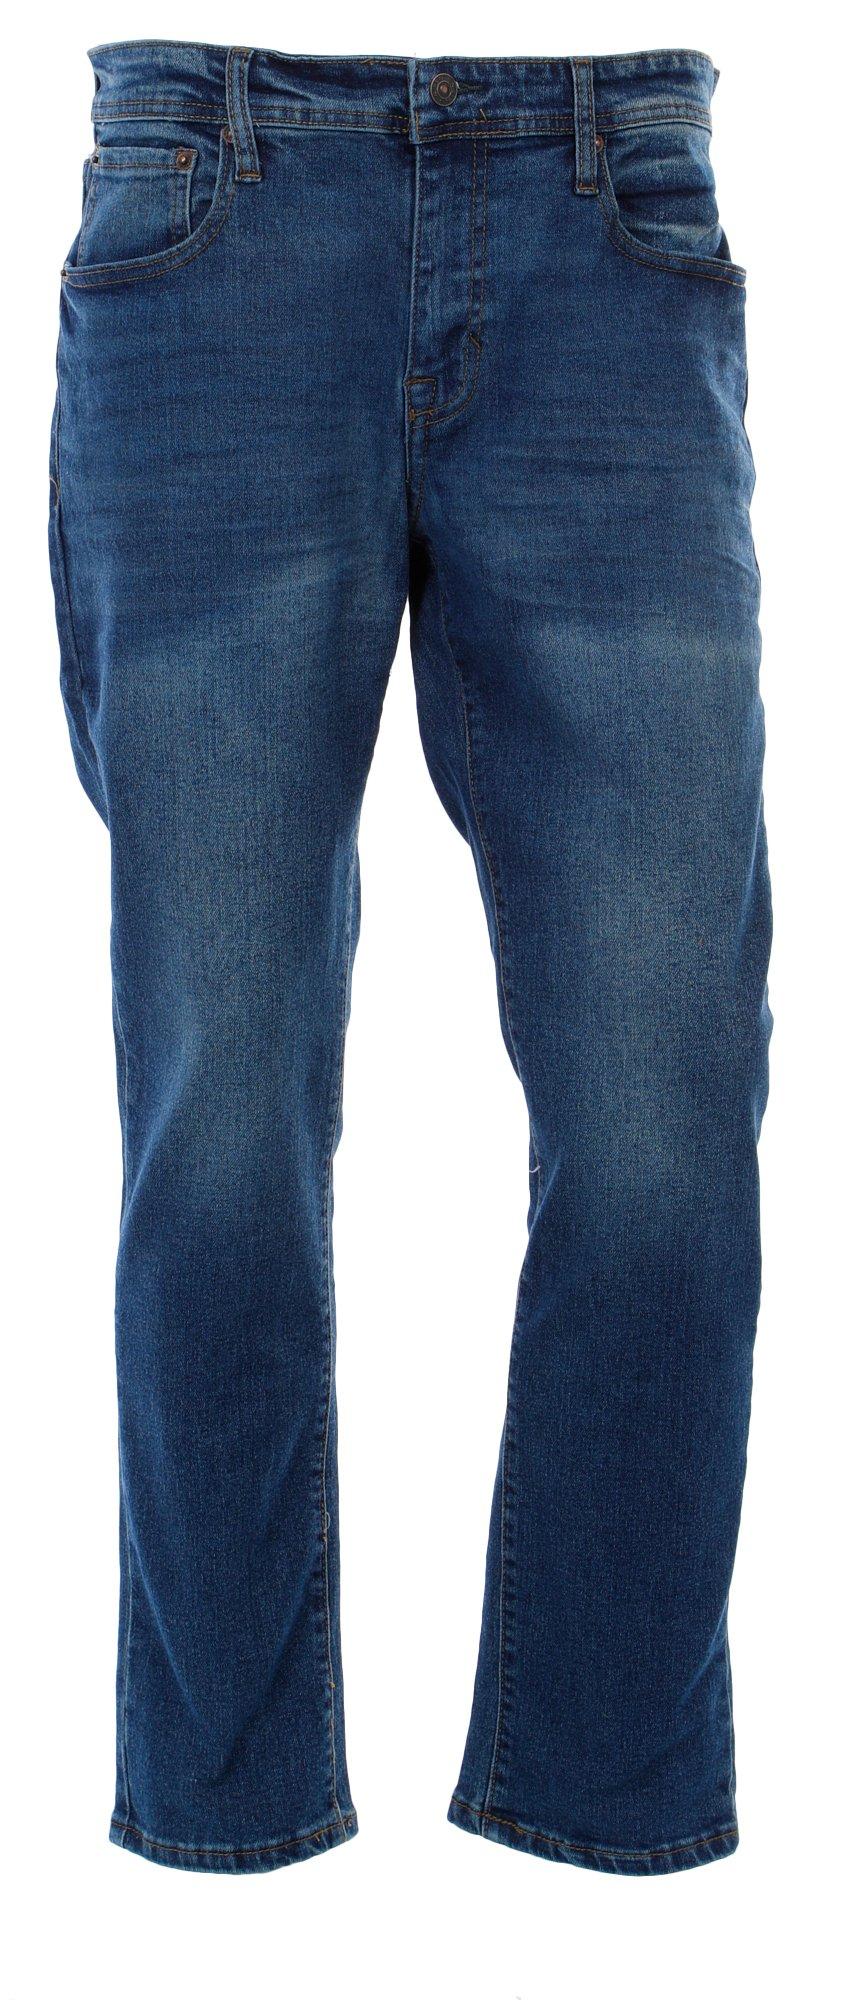 Men's Modern Slim Fit Jeans